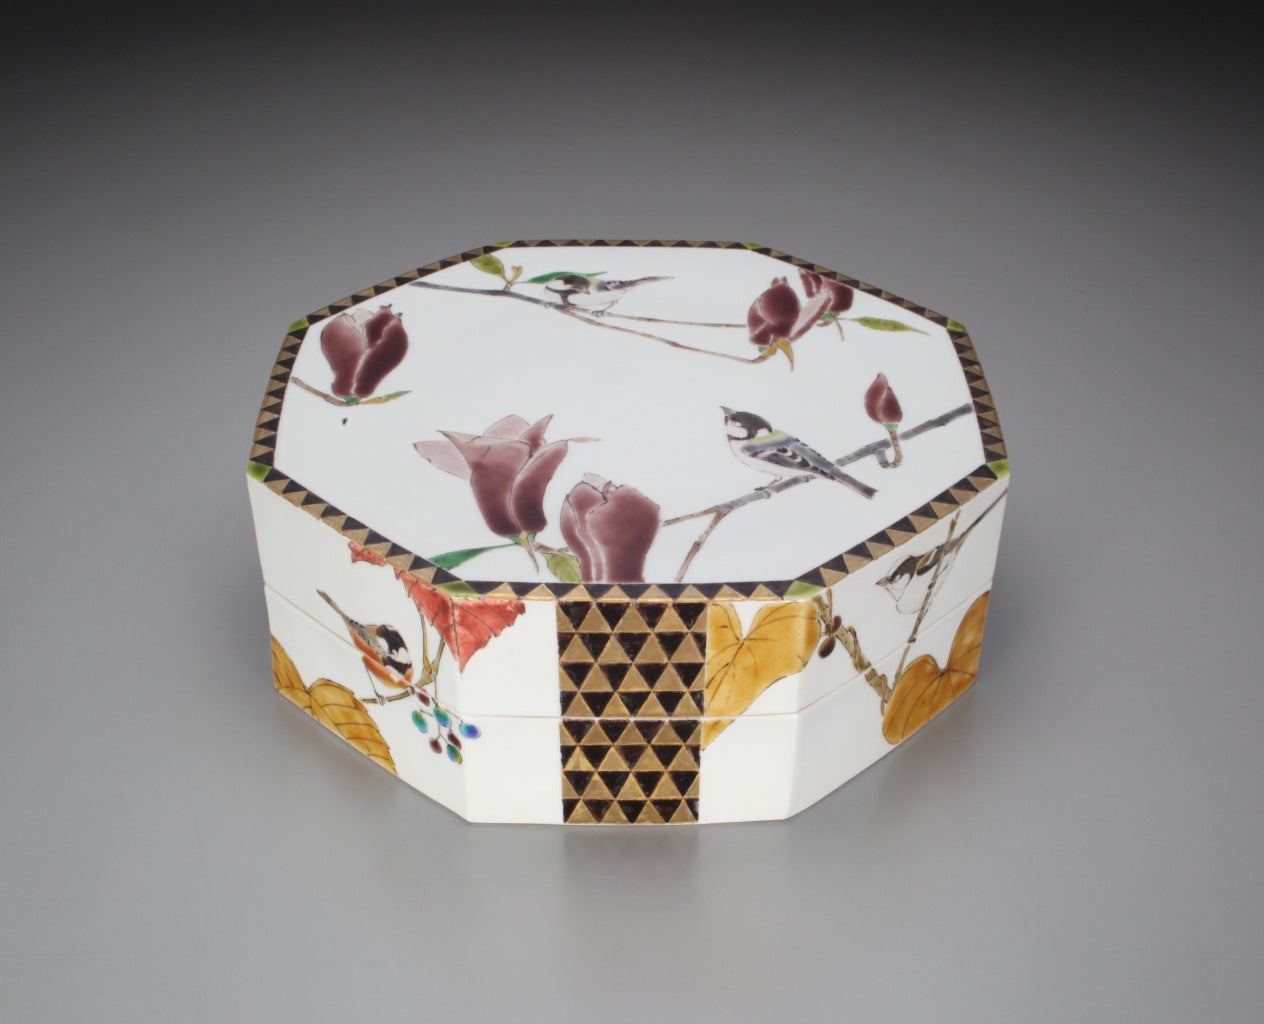 Octagonal box with wild bird designs - Art by Makoto Takahashi